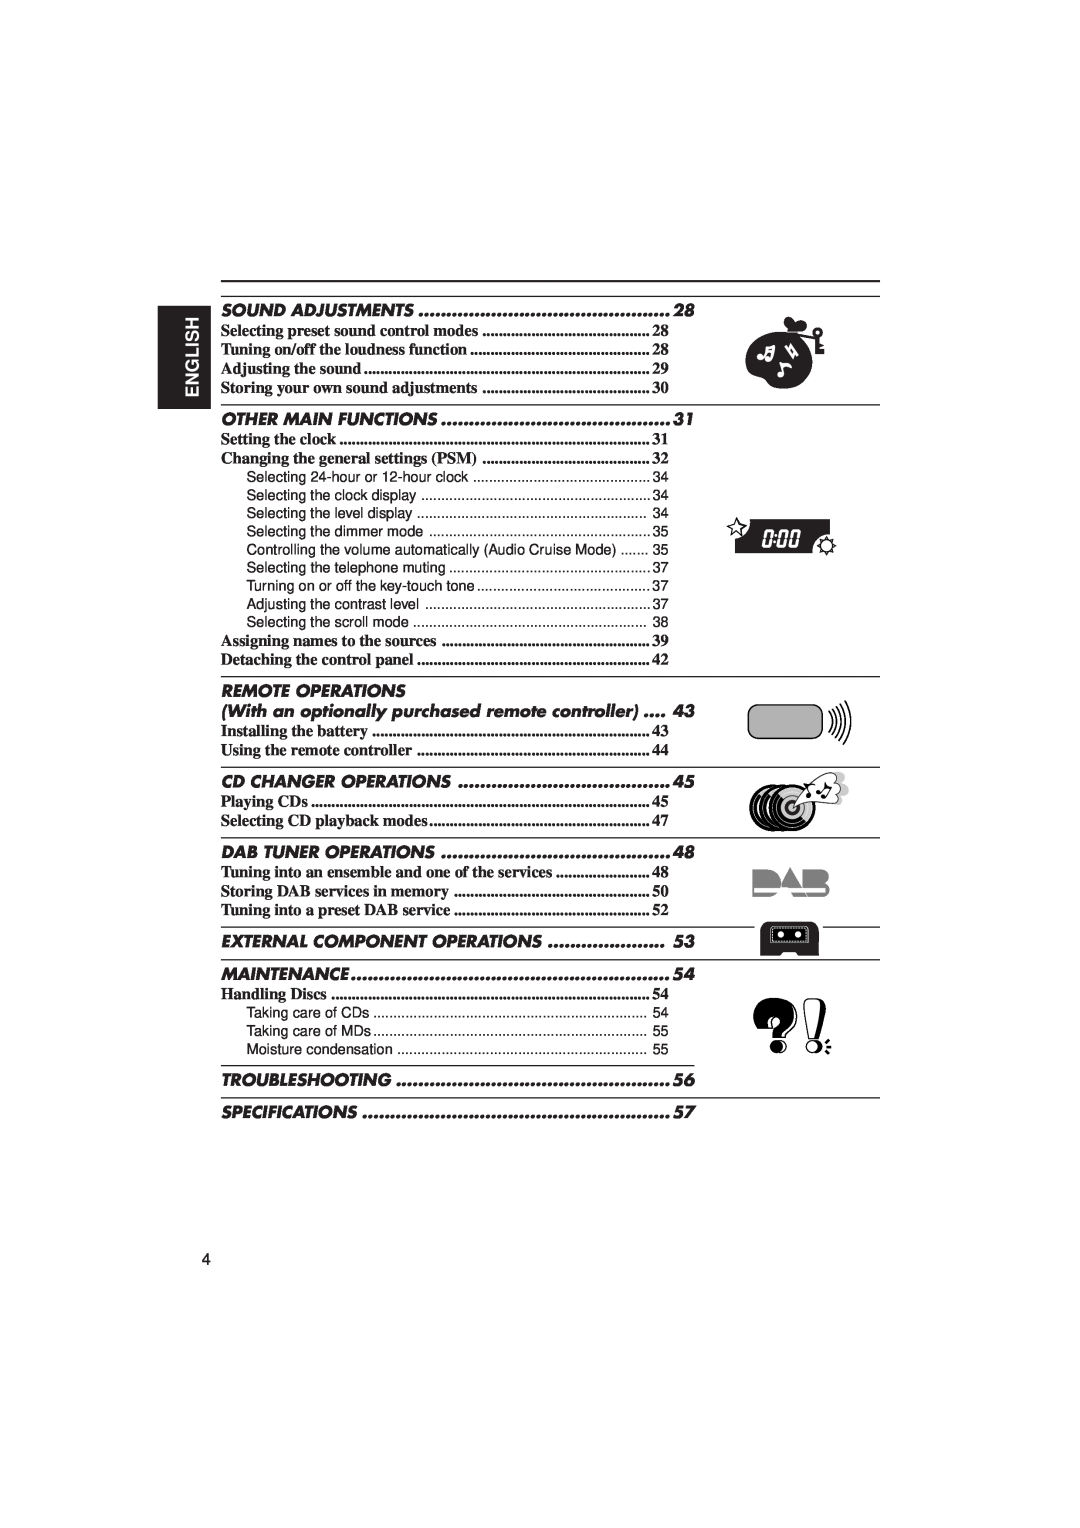 JVC KD-MX2900R manual English, Sound Adjustments, Handling Discs 